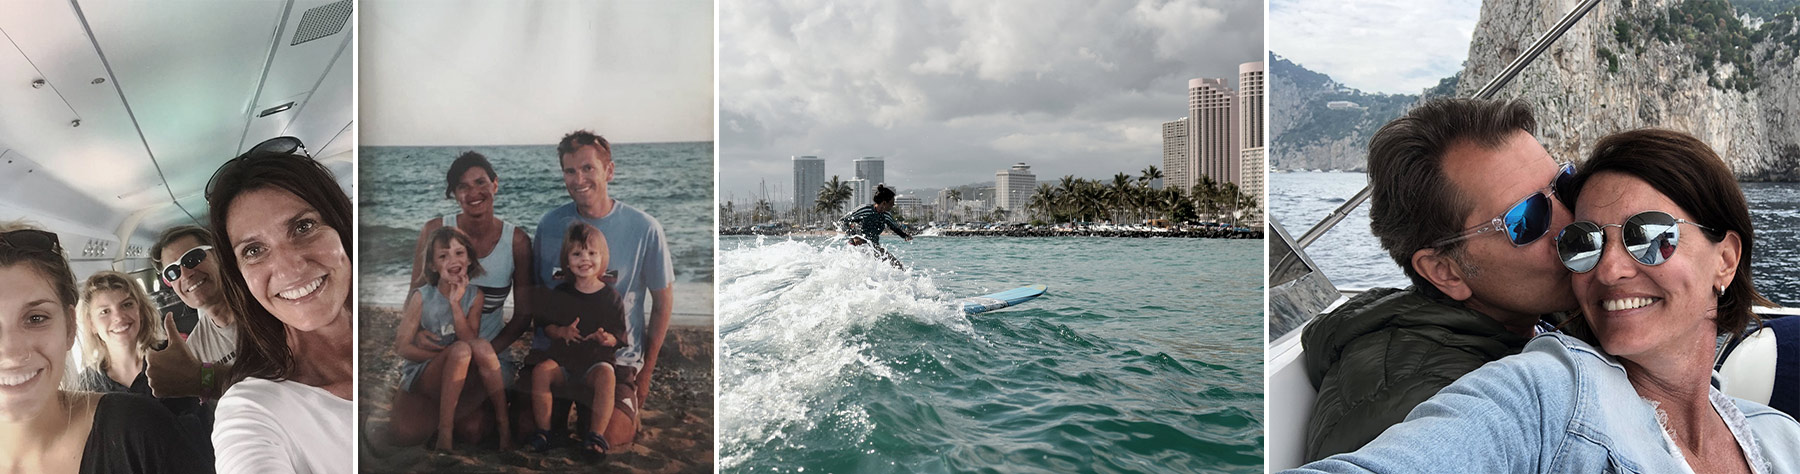 Elisabeth Mayerhofer - Family, Surfing, Happy